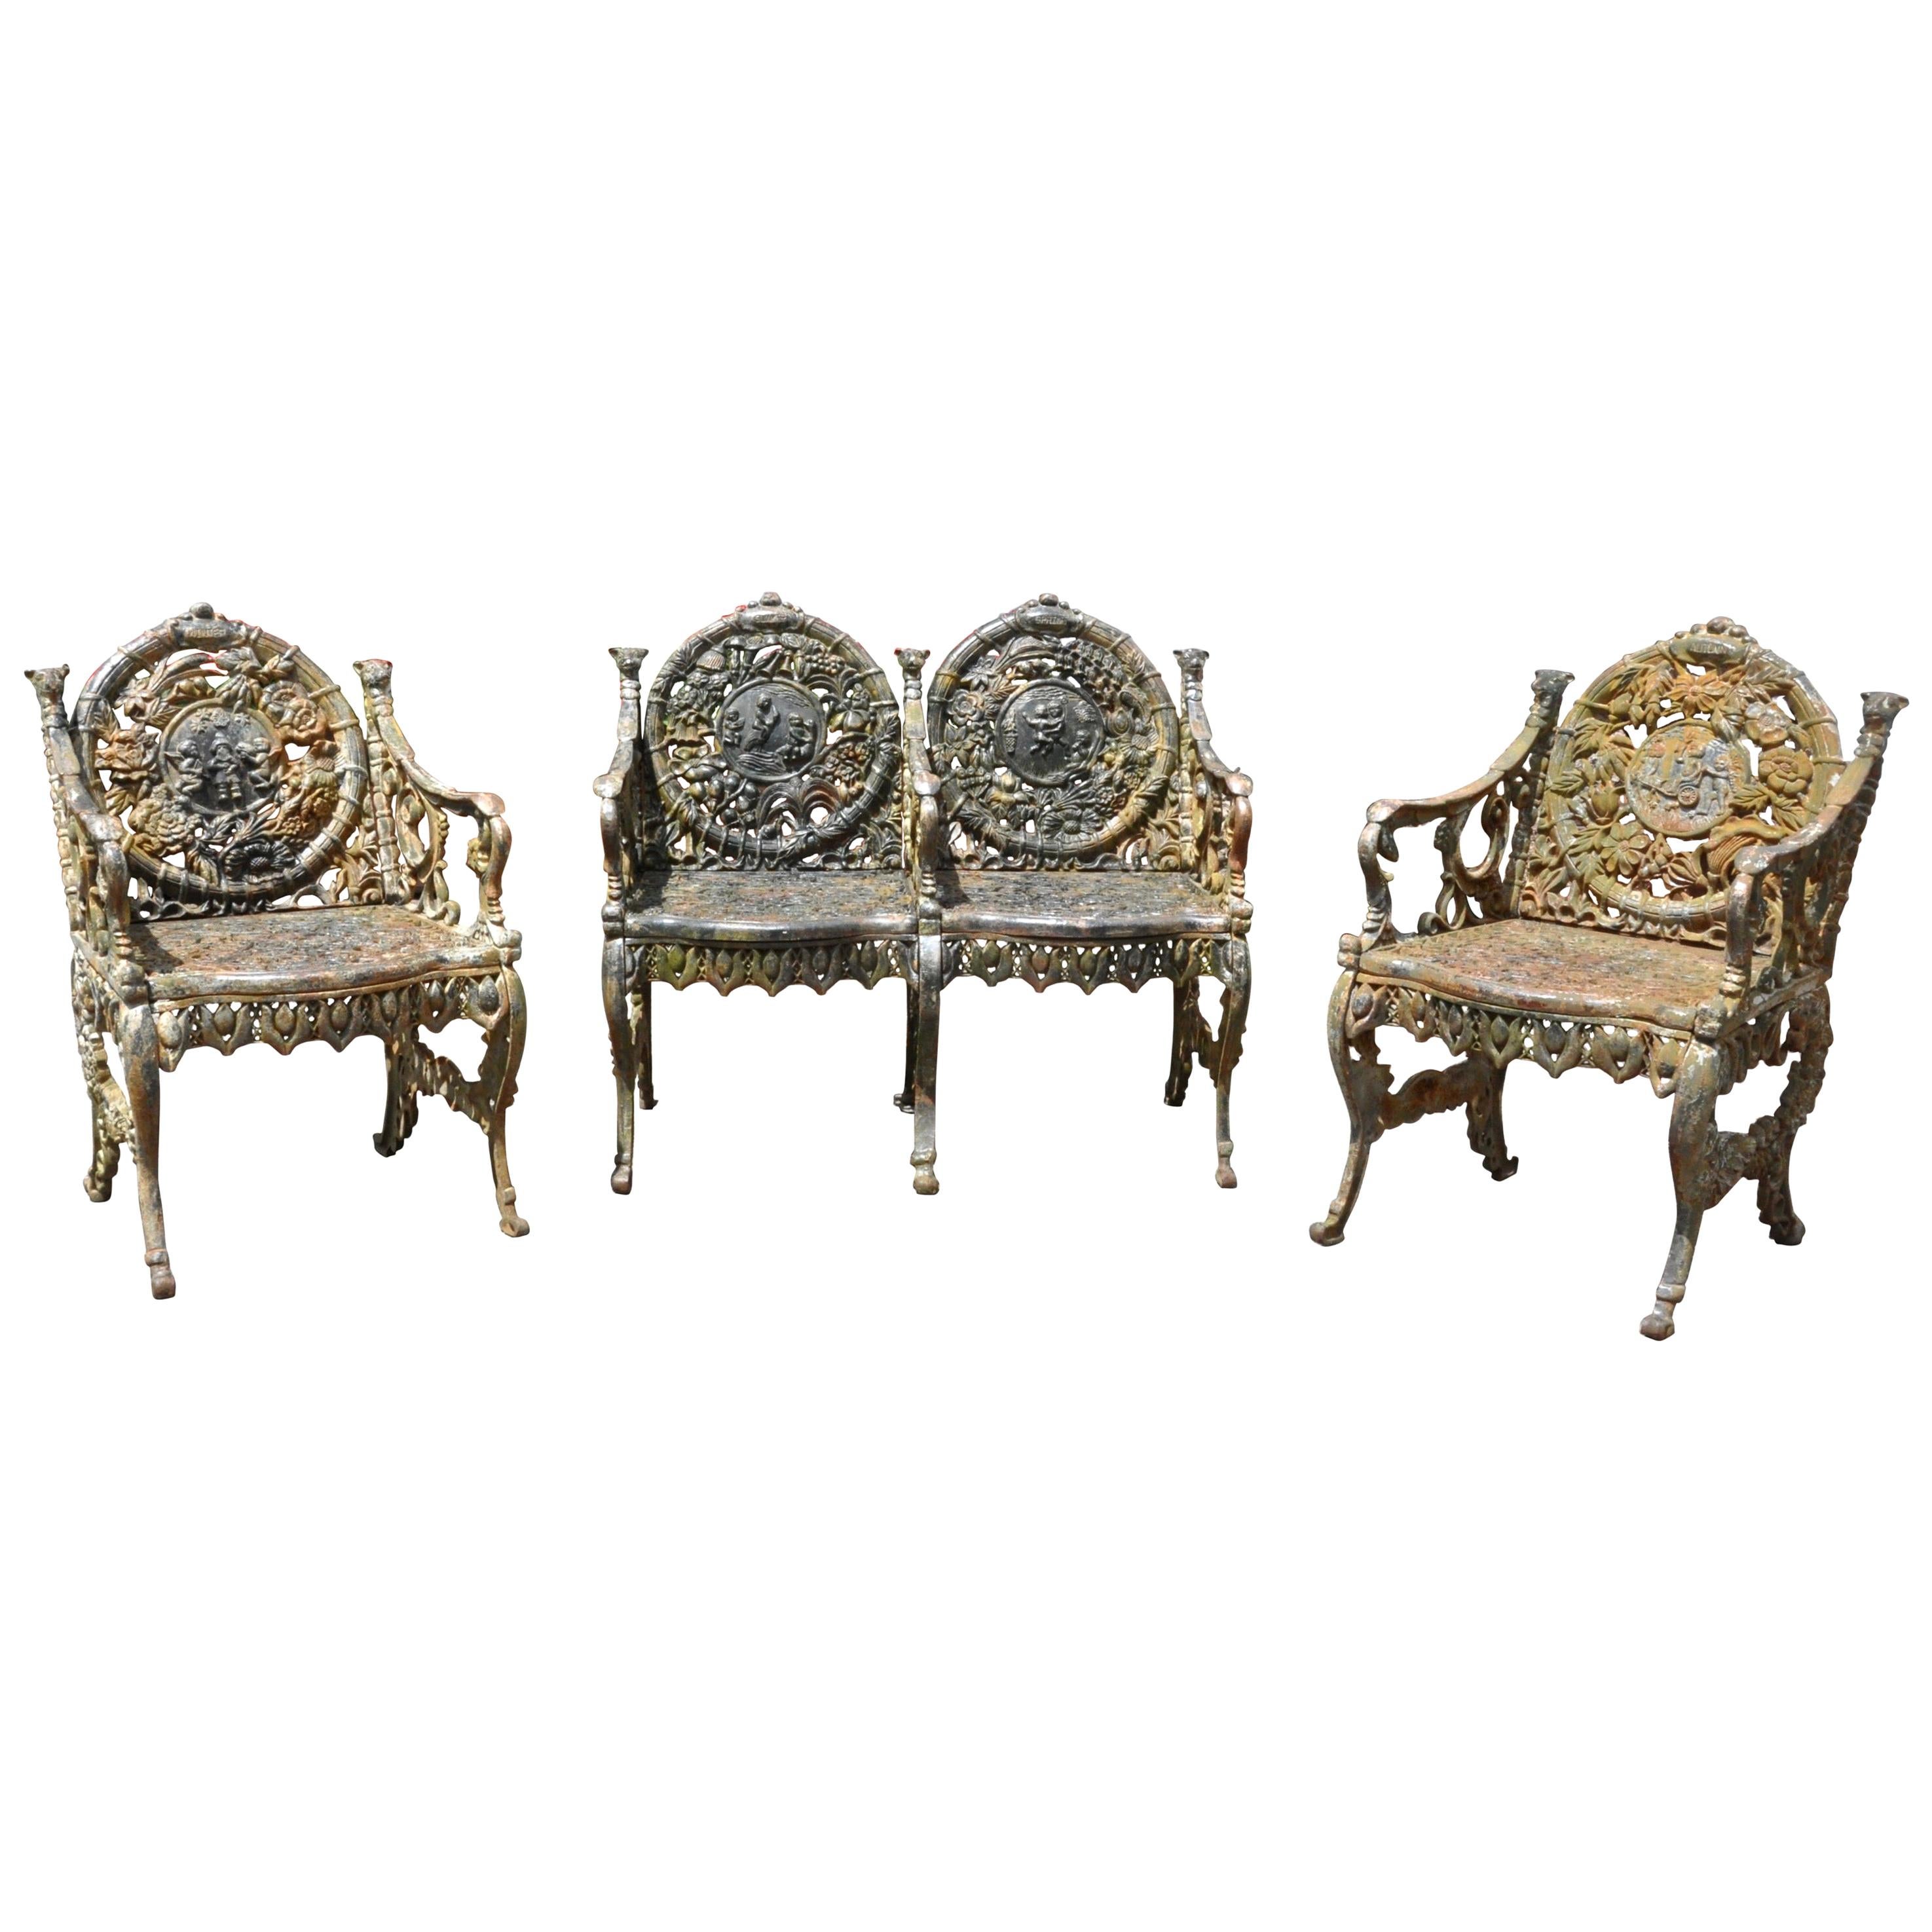 Set of Victorian Cast Iron "Four Seasons" Garden Seat Furniture by Northampton